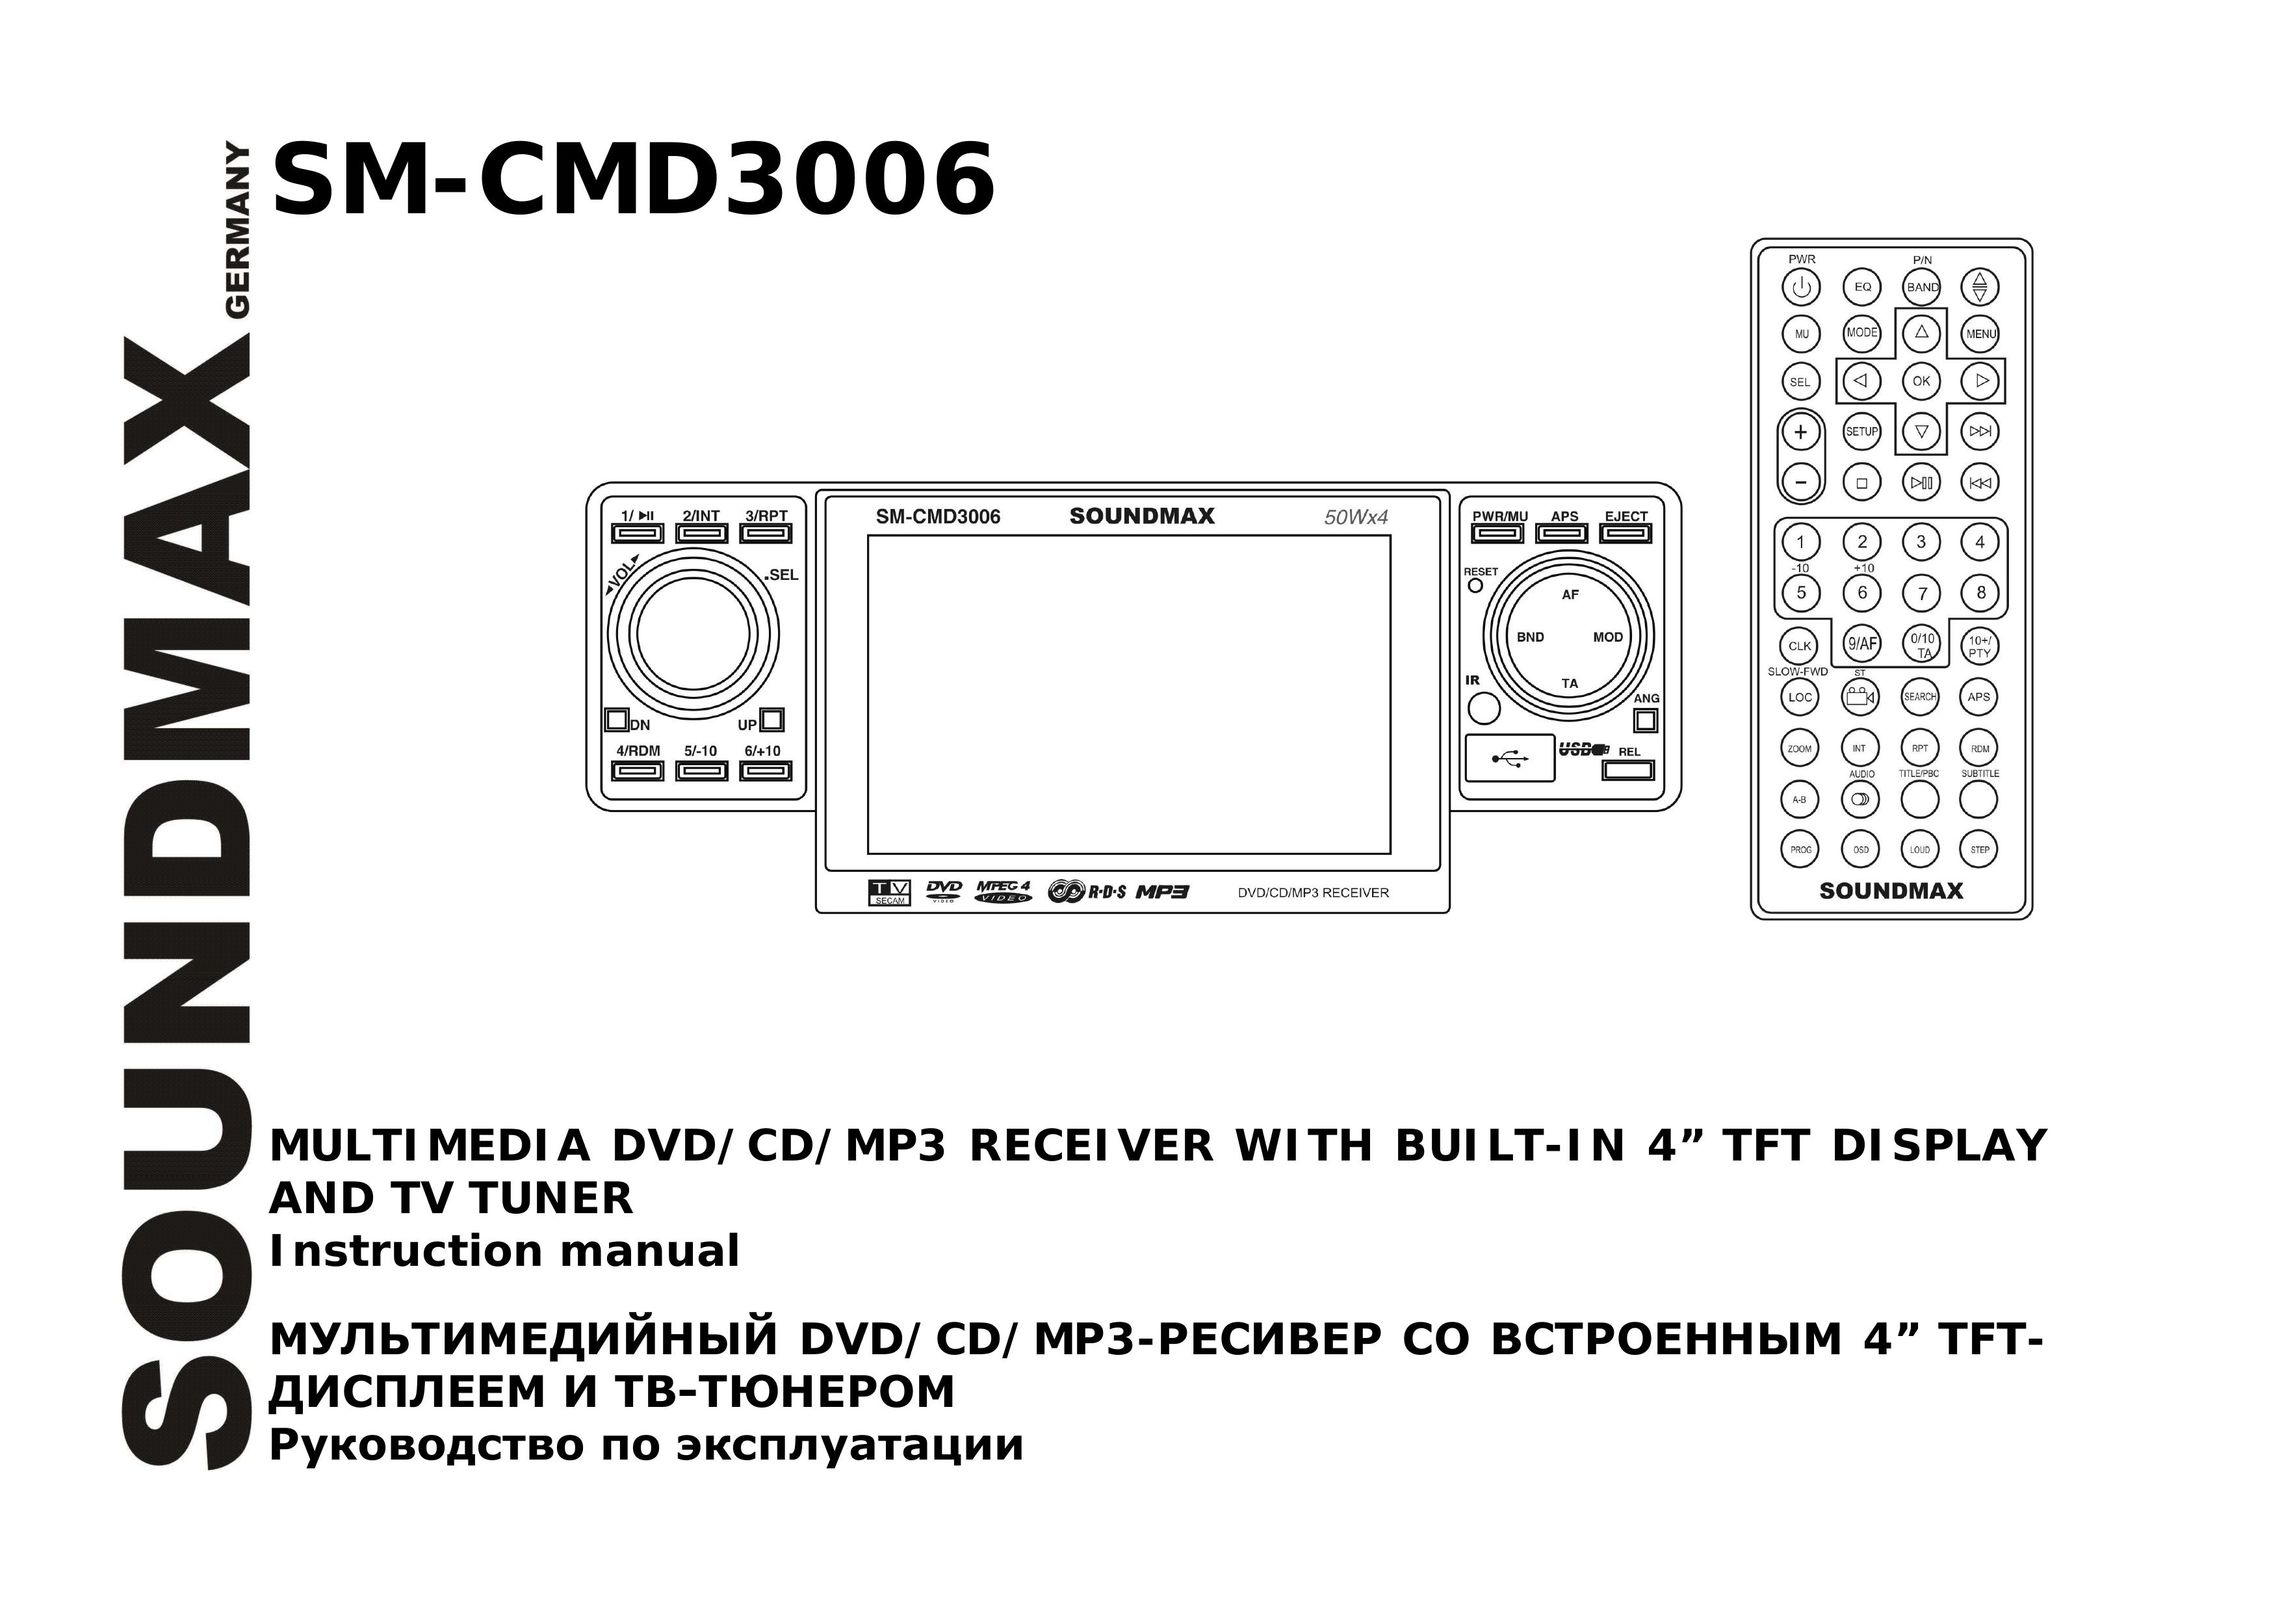 Compaq SM-CMD3006 MP3 Player User Manual